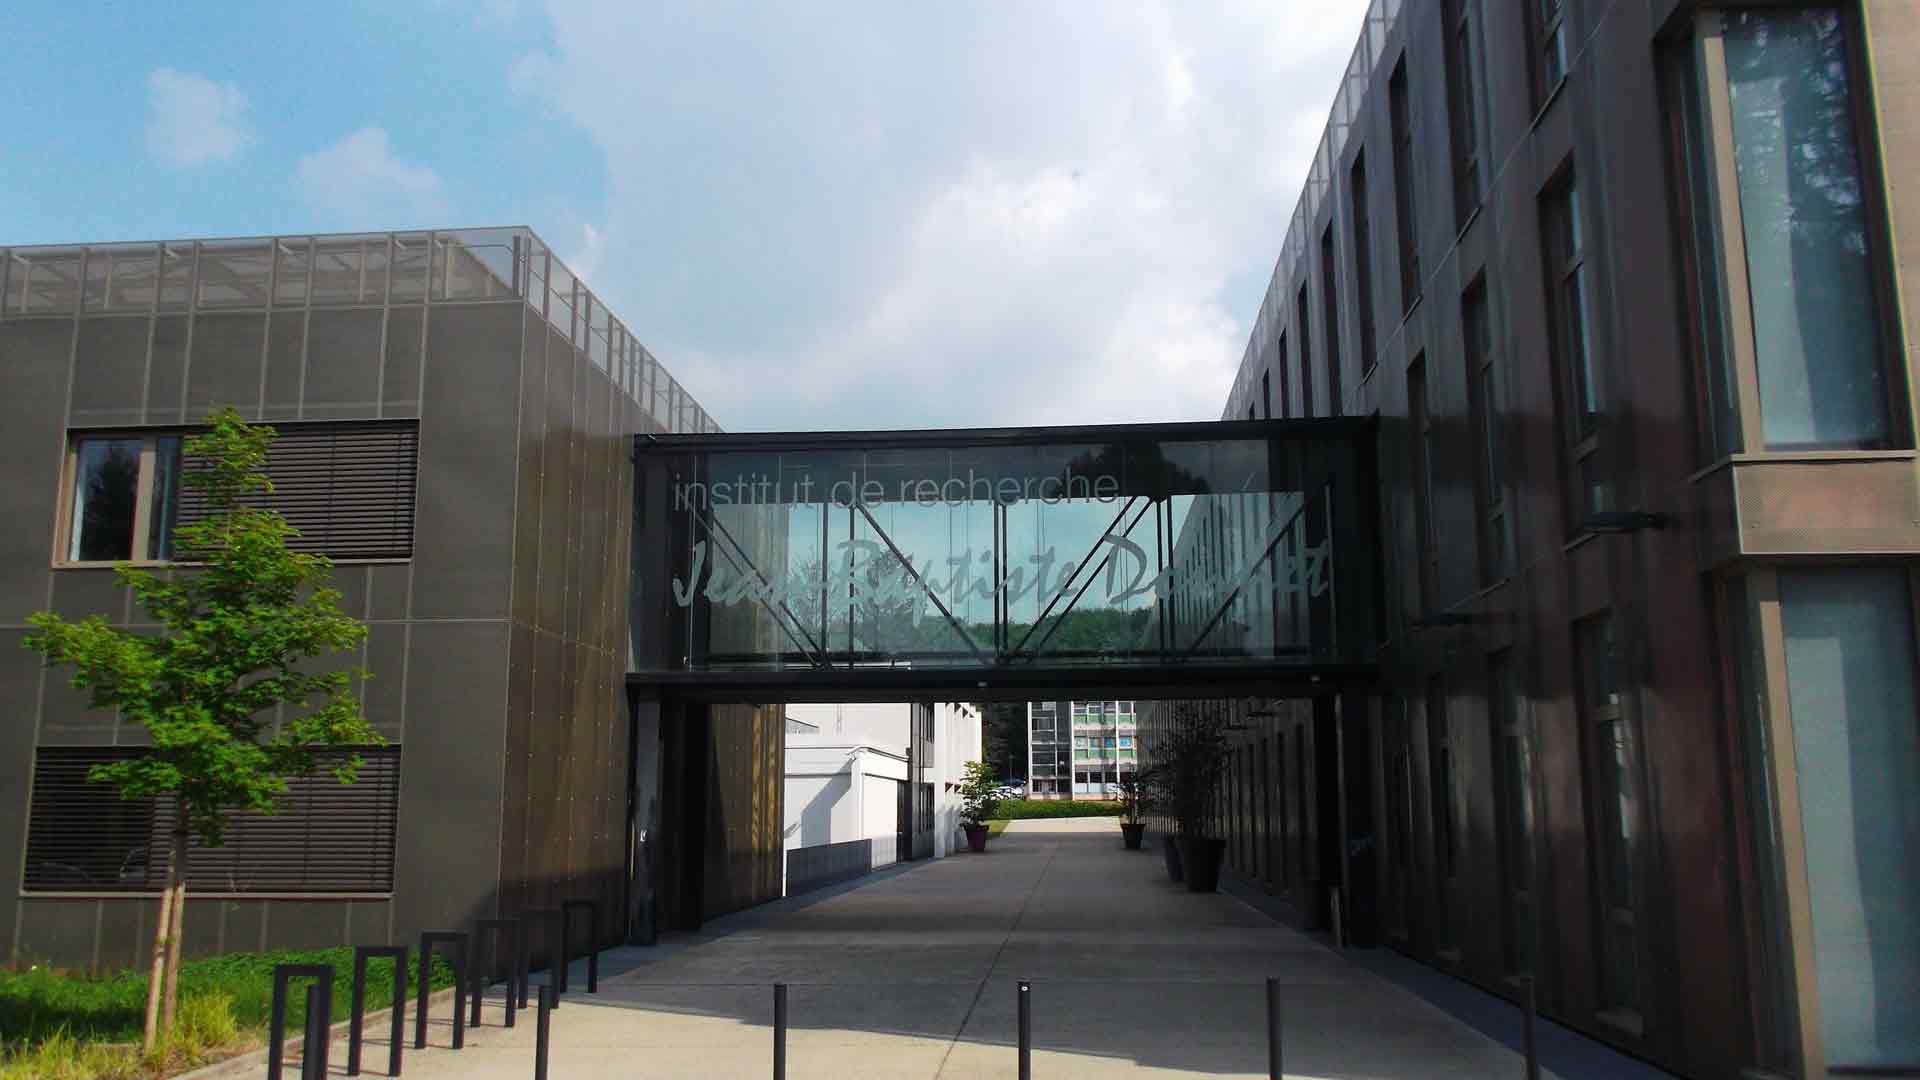 The Jean-Baptiste Donnet Institute